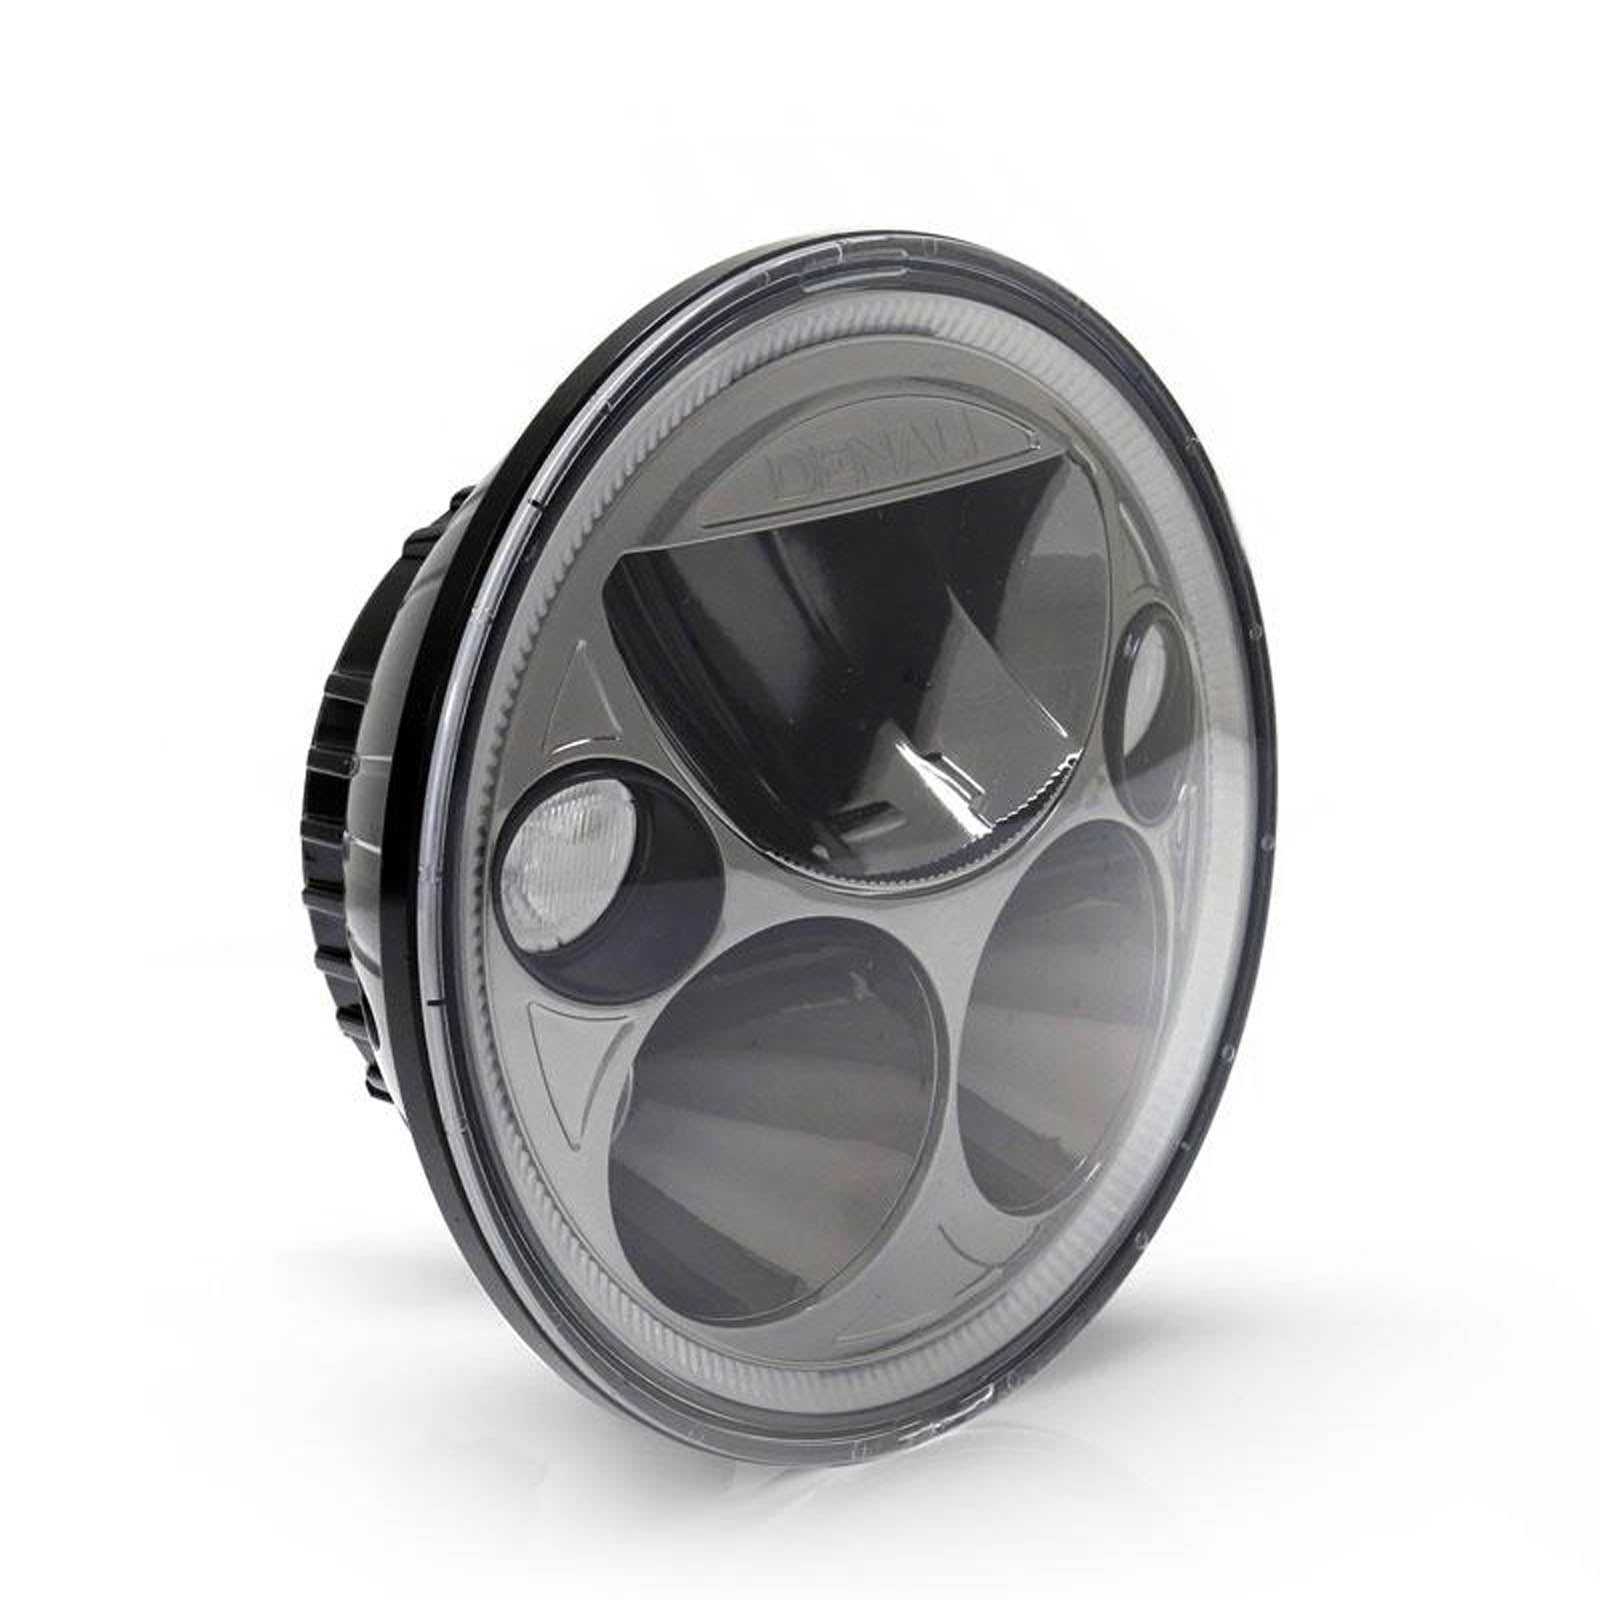 Denali Lighting, DENALI M5 E-MARK LED HEADLIGHT MODULE, 5.75" ROUND, BLK CHR